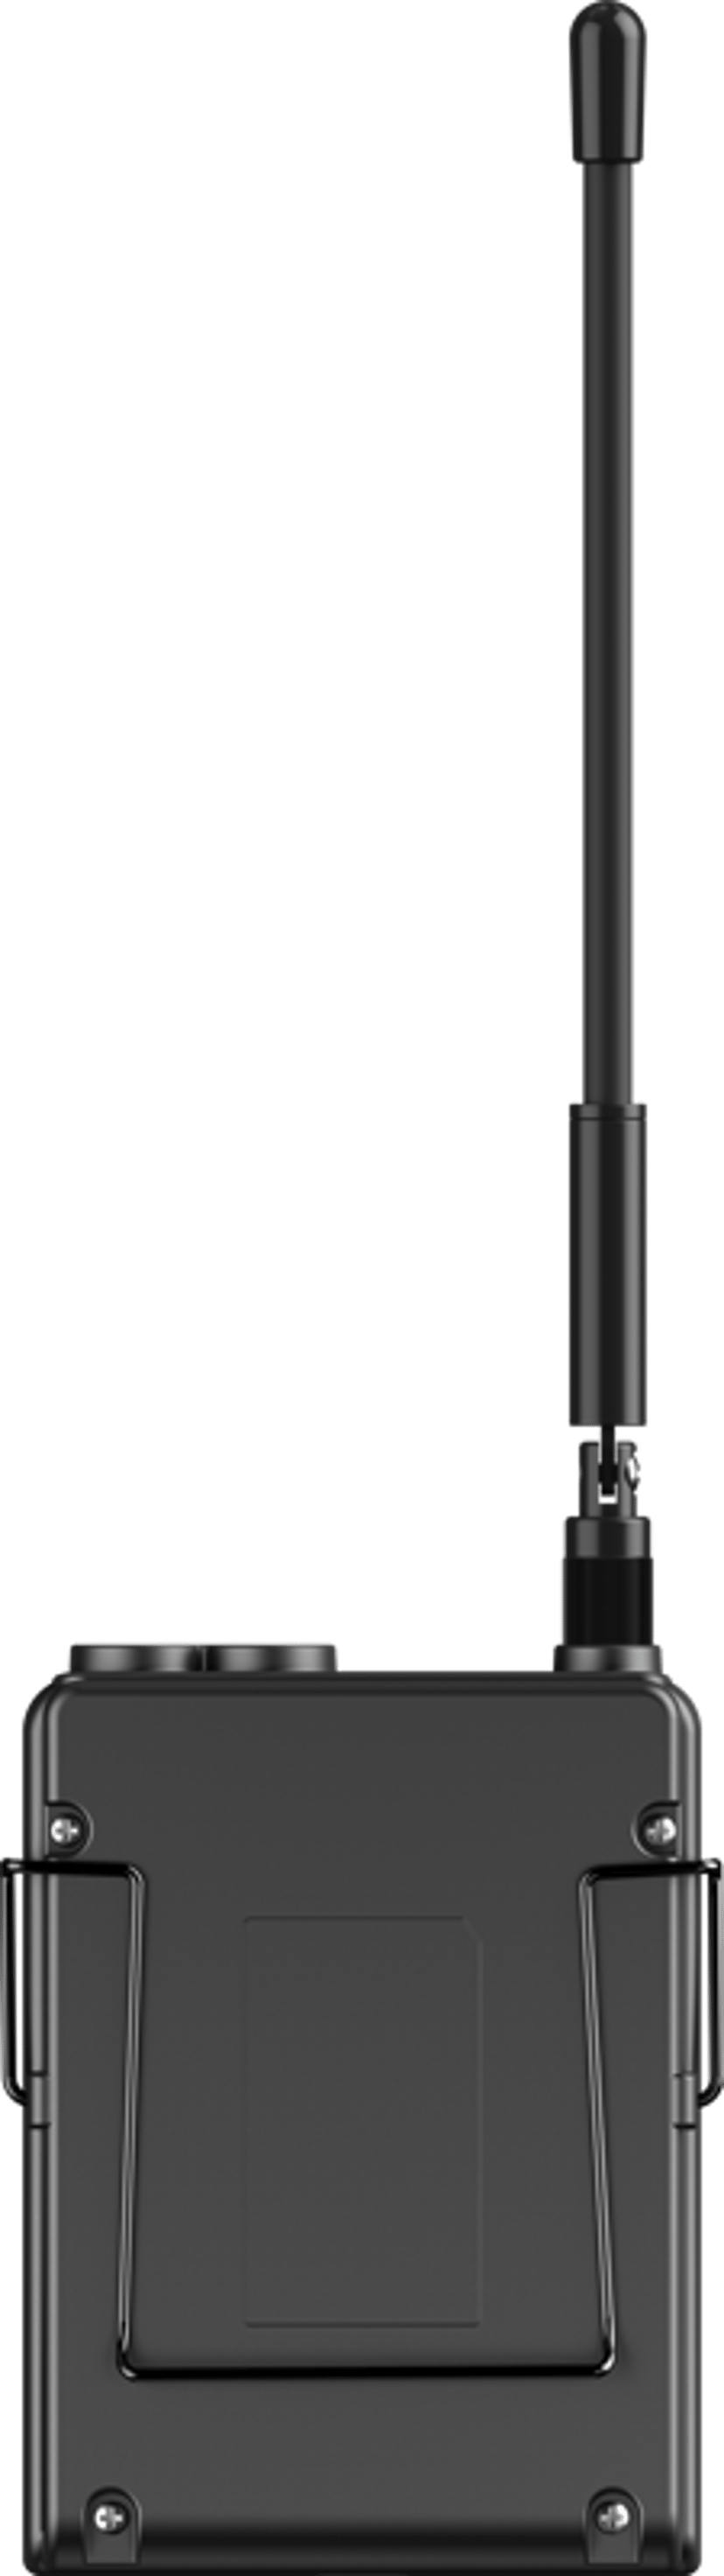 Saramonic UwMic9S Kit 2 (TX+TX+RX) Svart